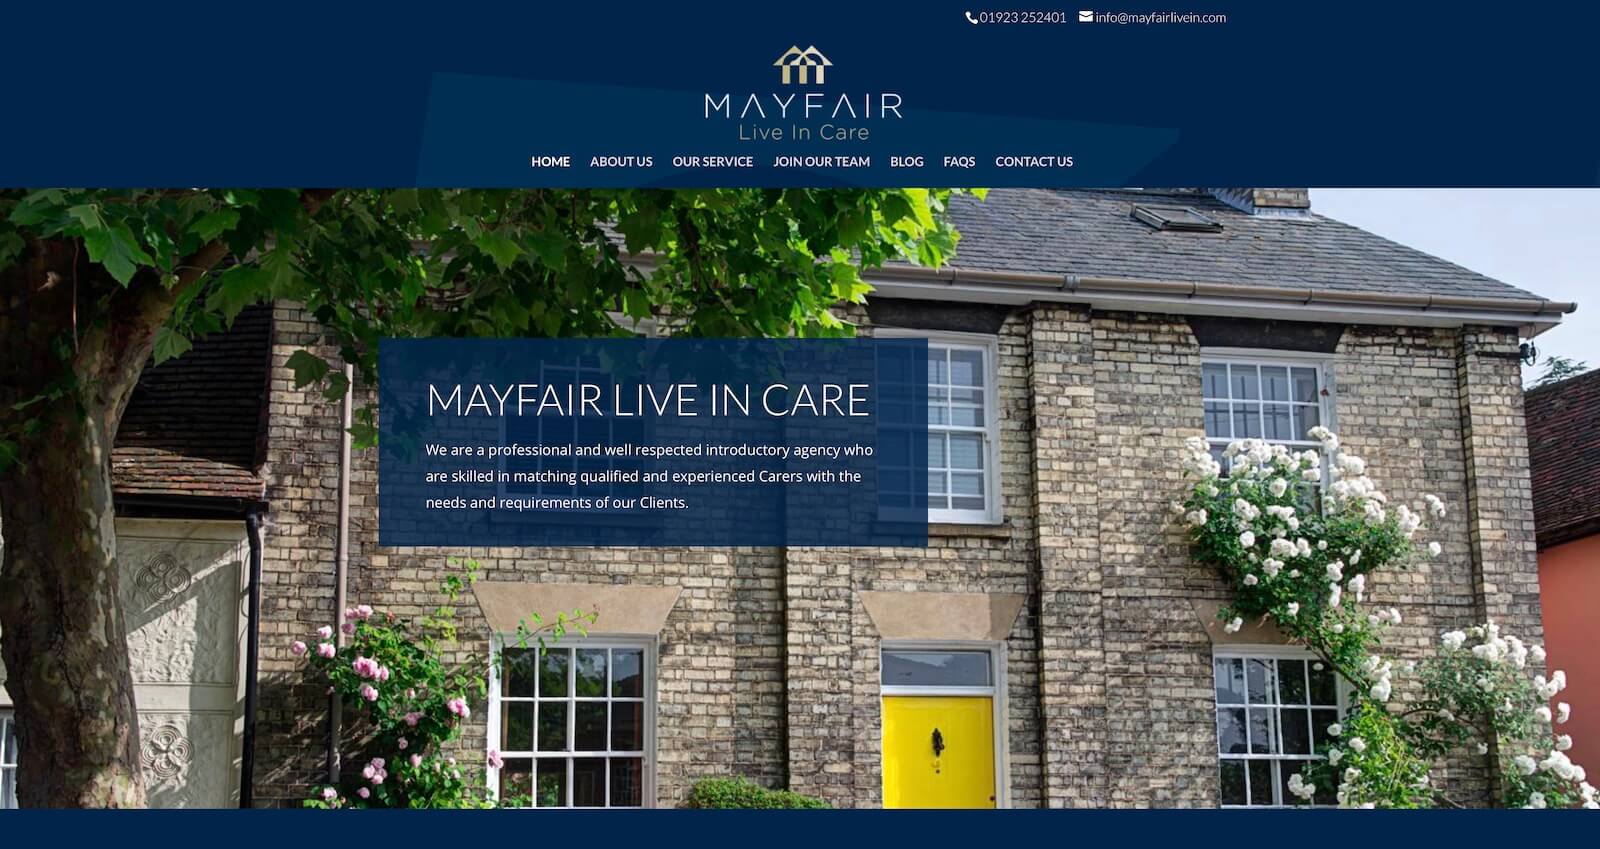 Mayfair Live In Care Website Design